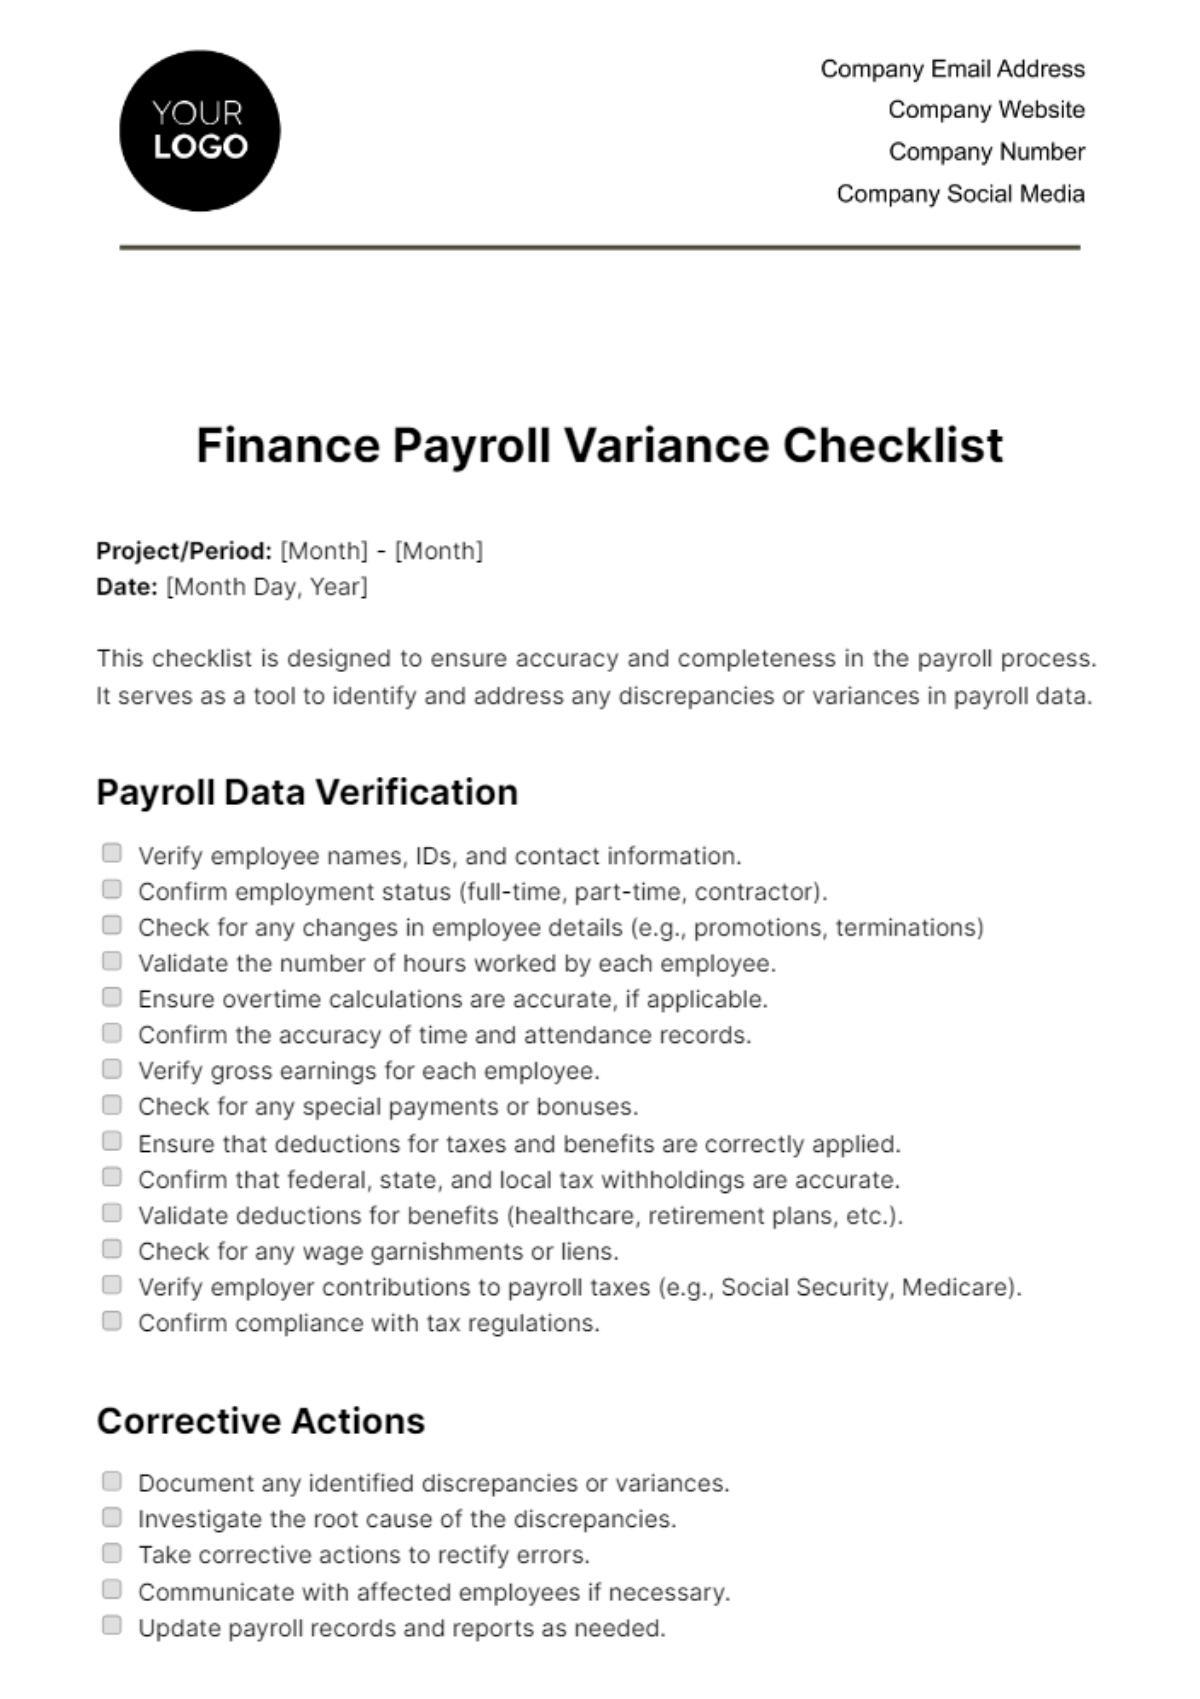 Finance Payroll Variance Checklist Template